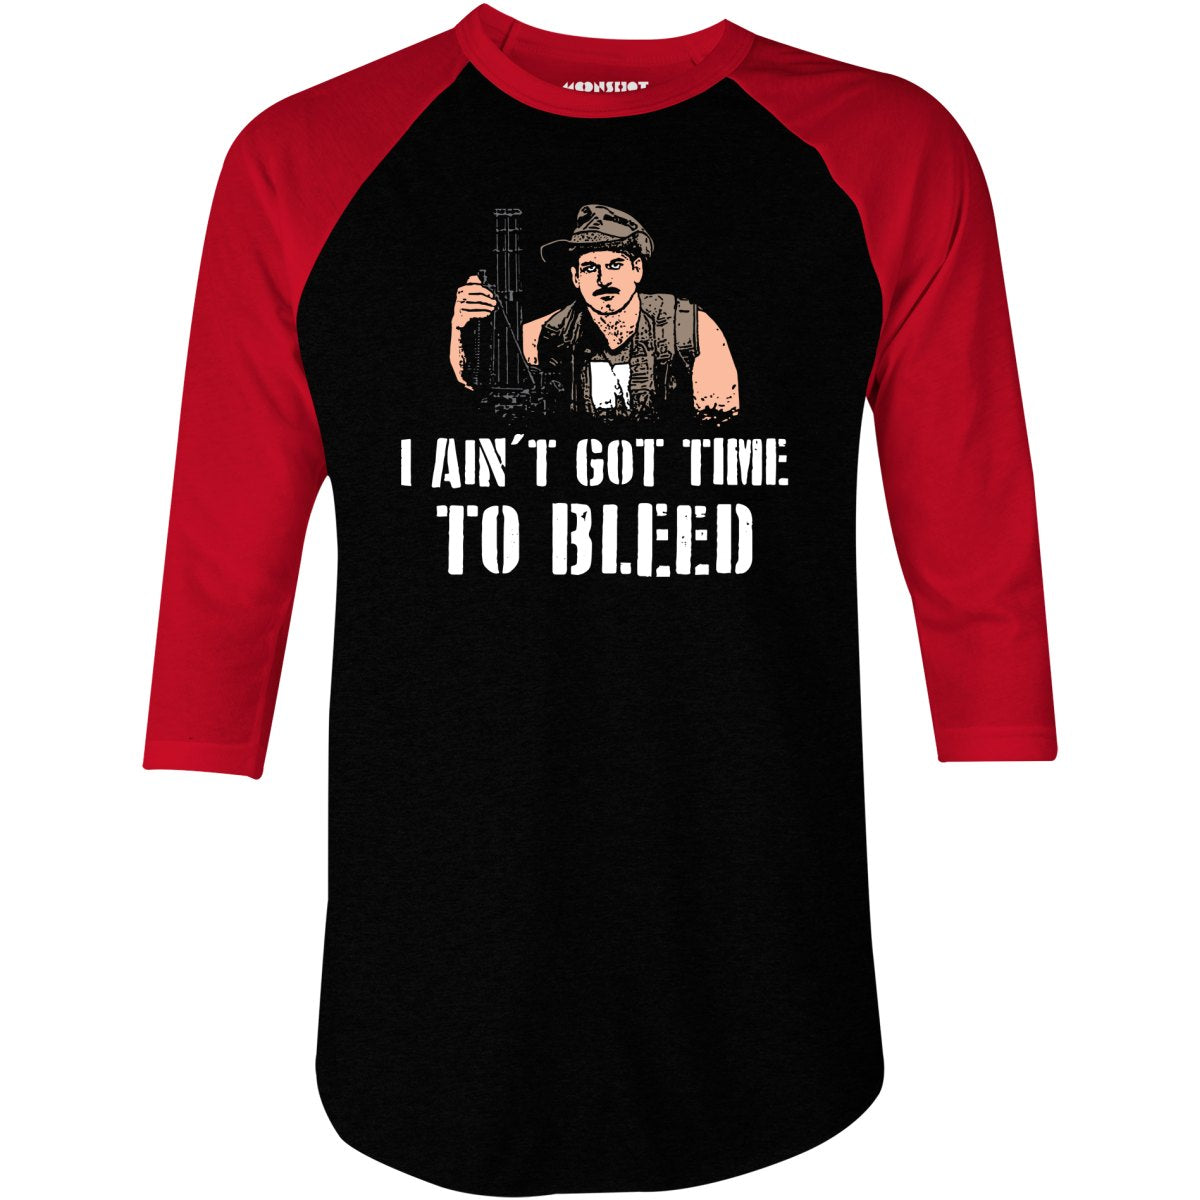 I Ain't Got Time to Bleed - 3/4 Sleeve Raglan T-Shirt